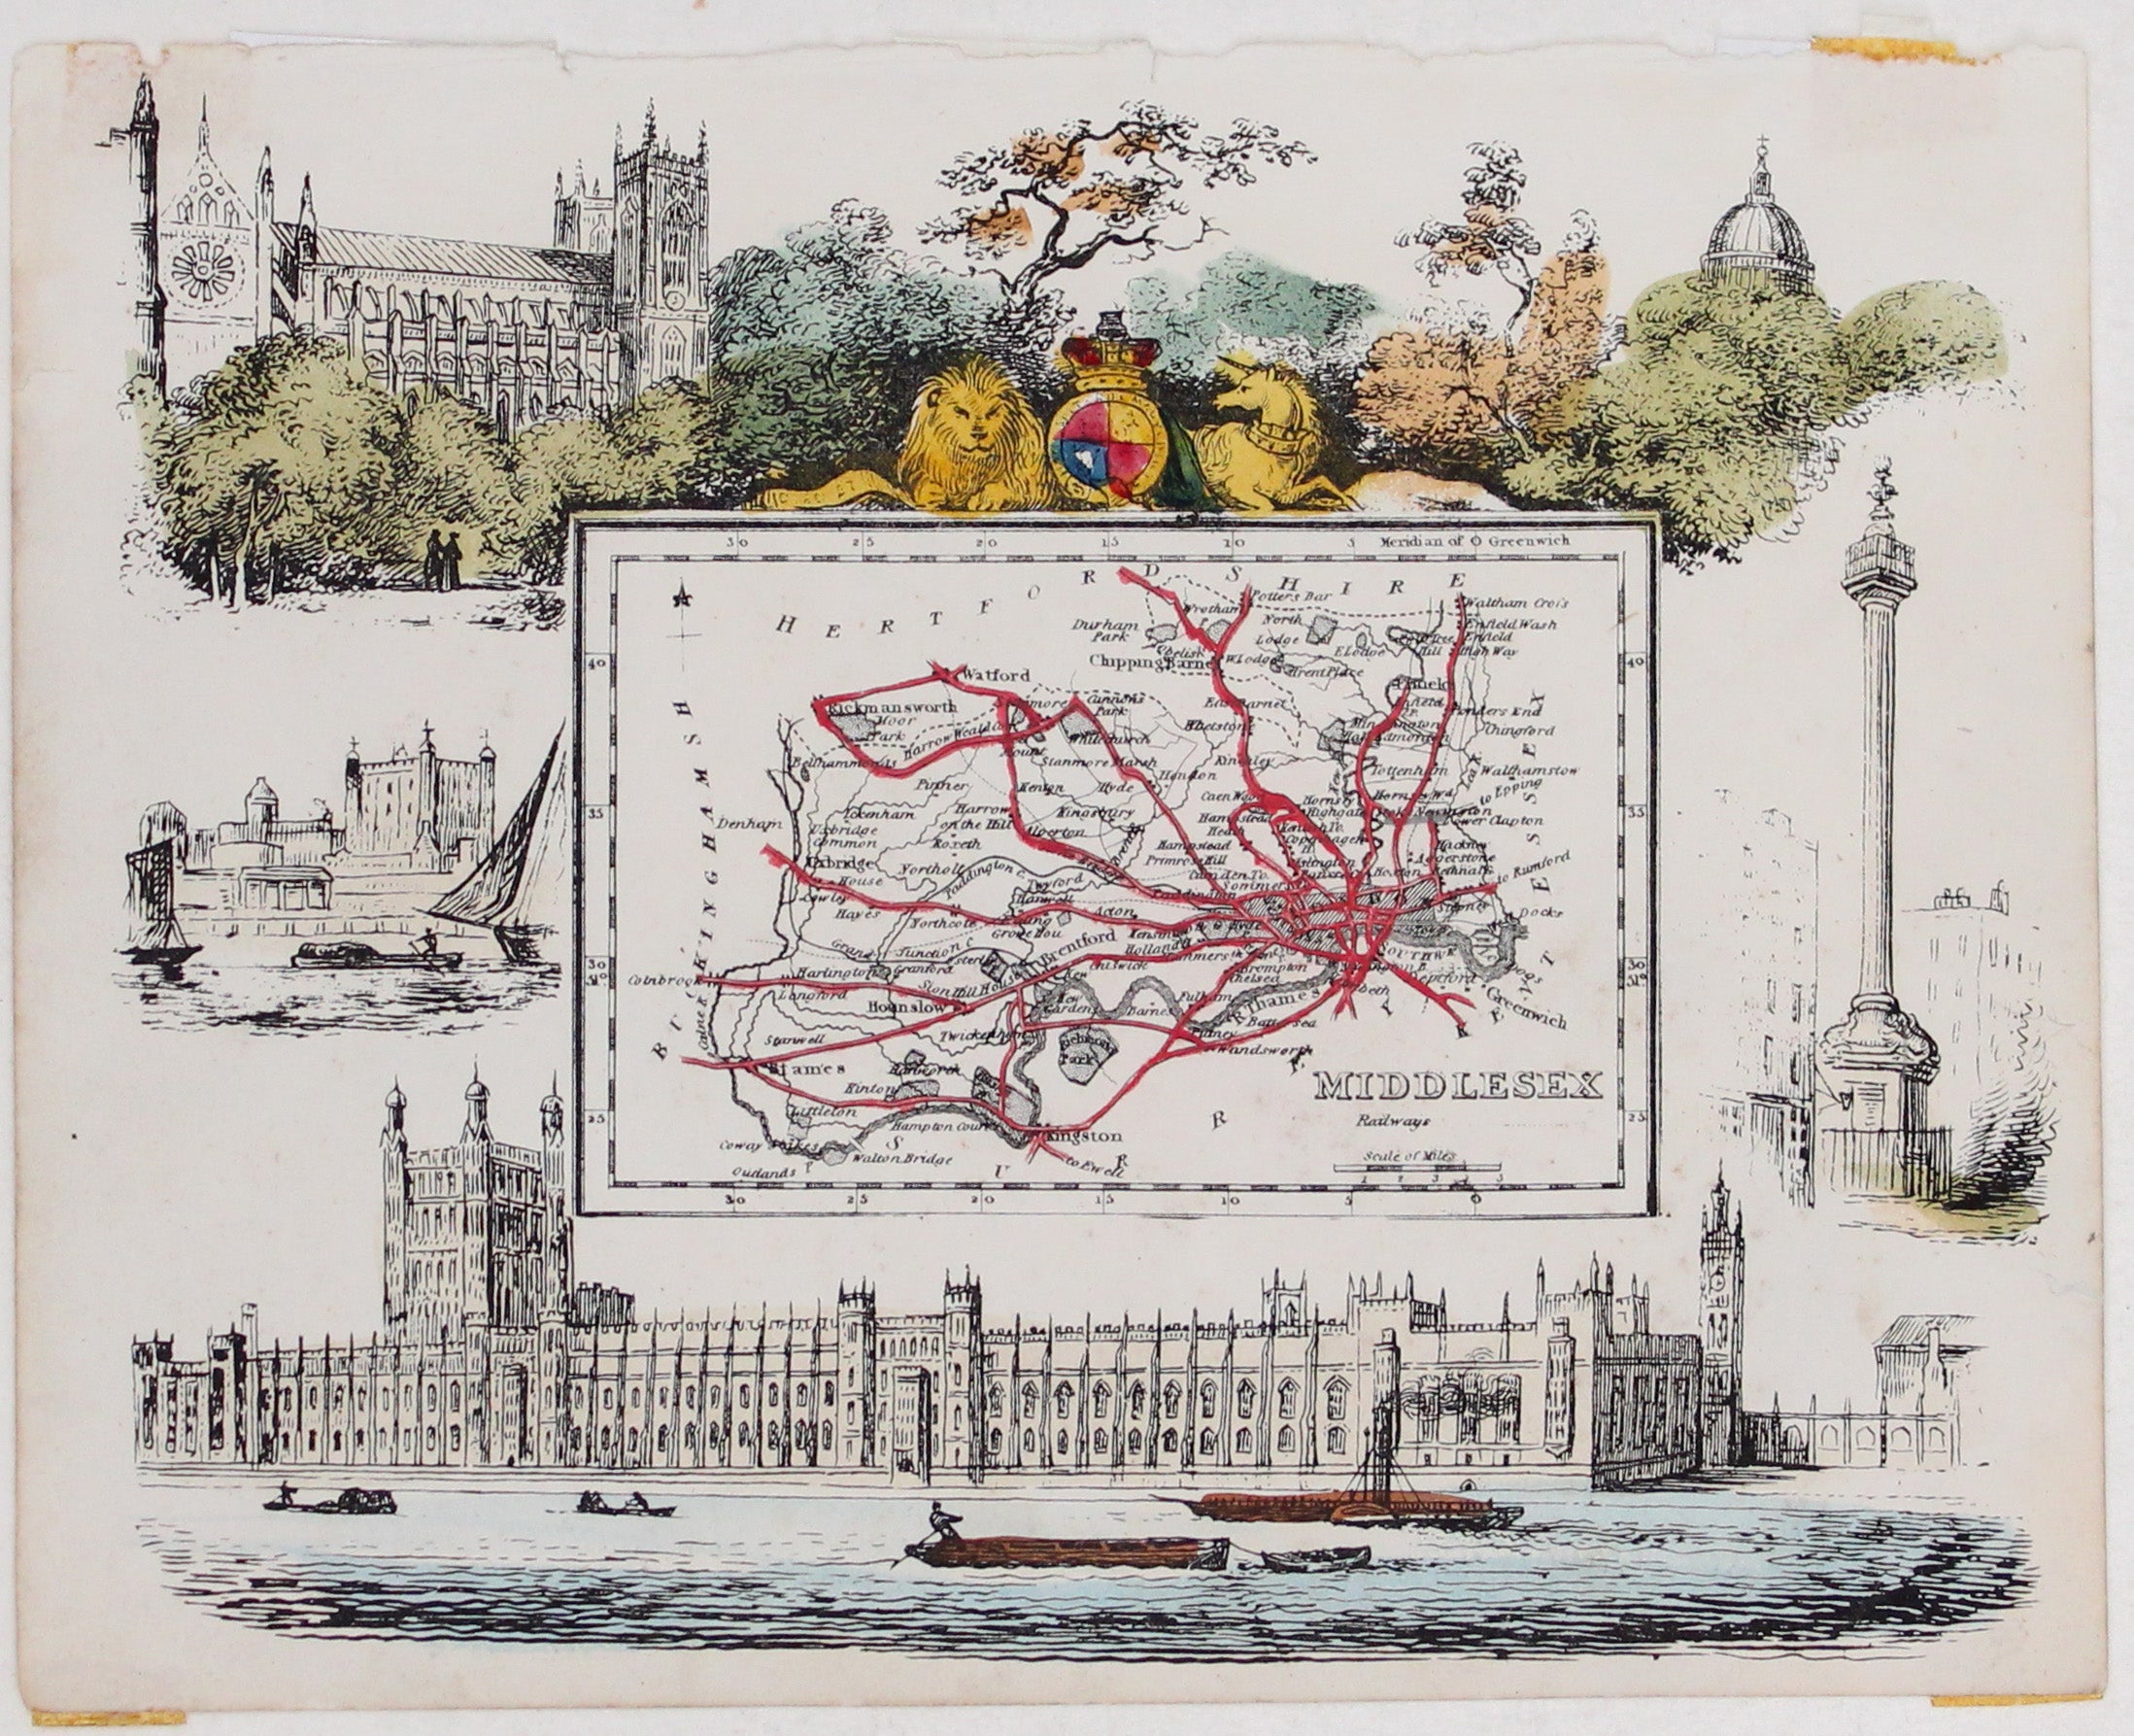 Reuben Ramble's Map of Middlesex